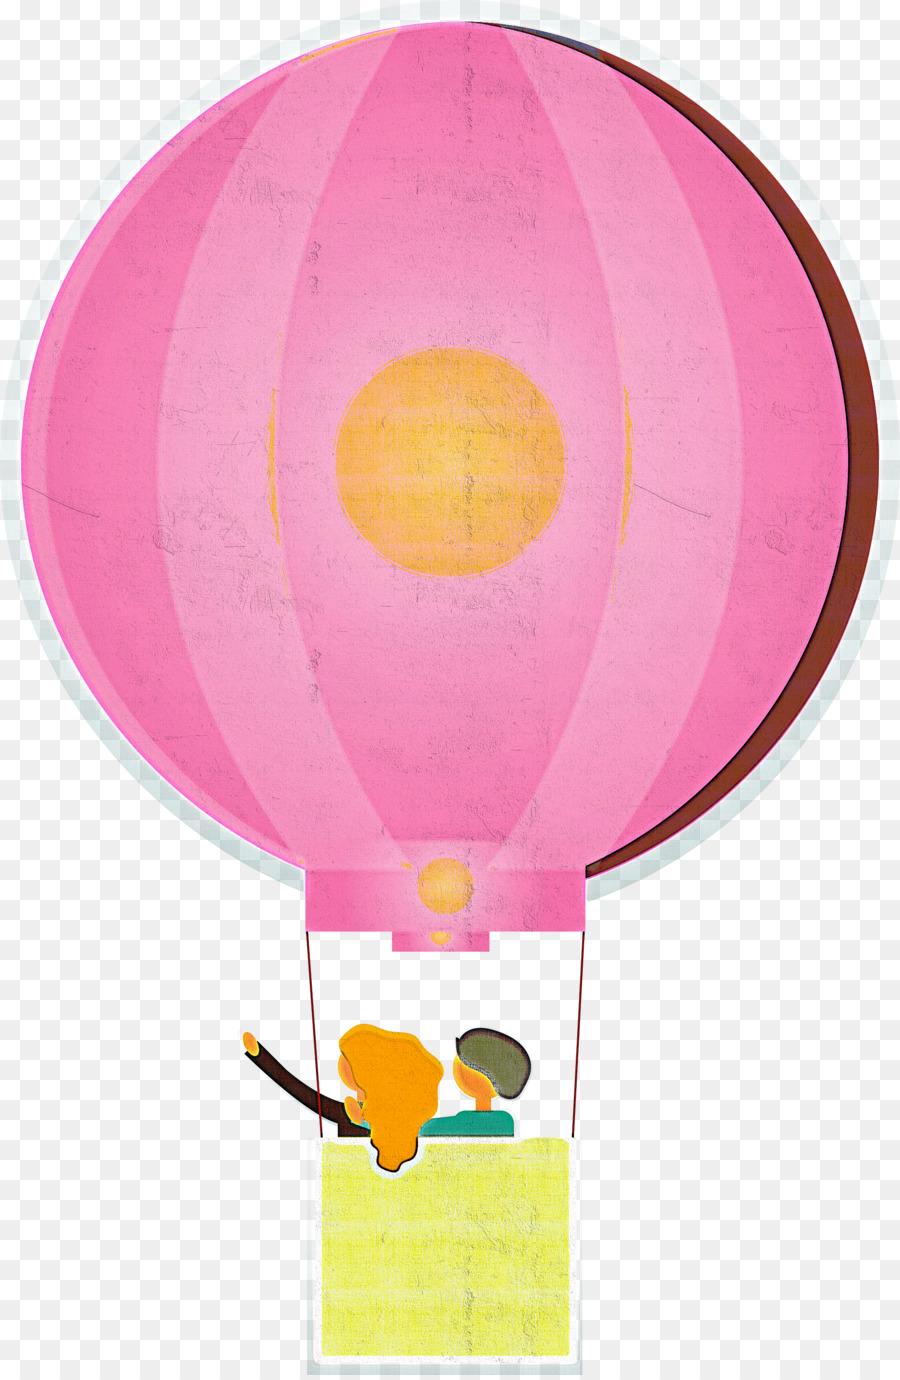 hot air balloon floating